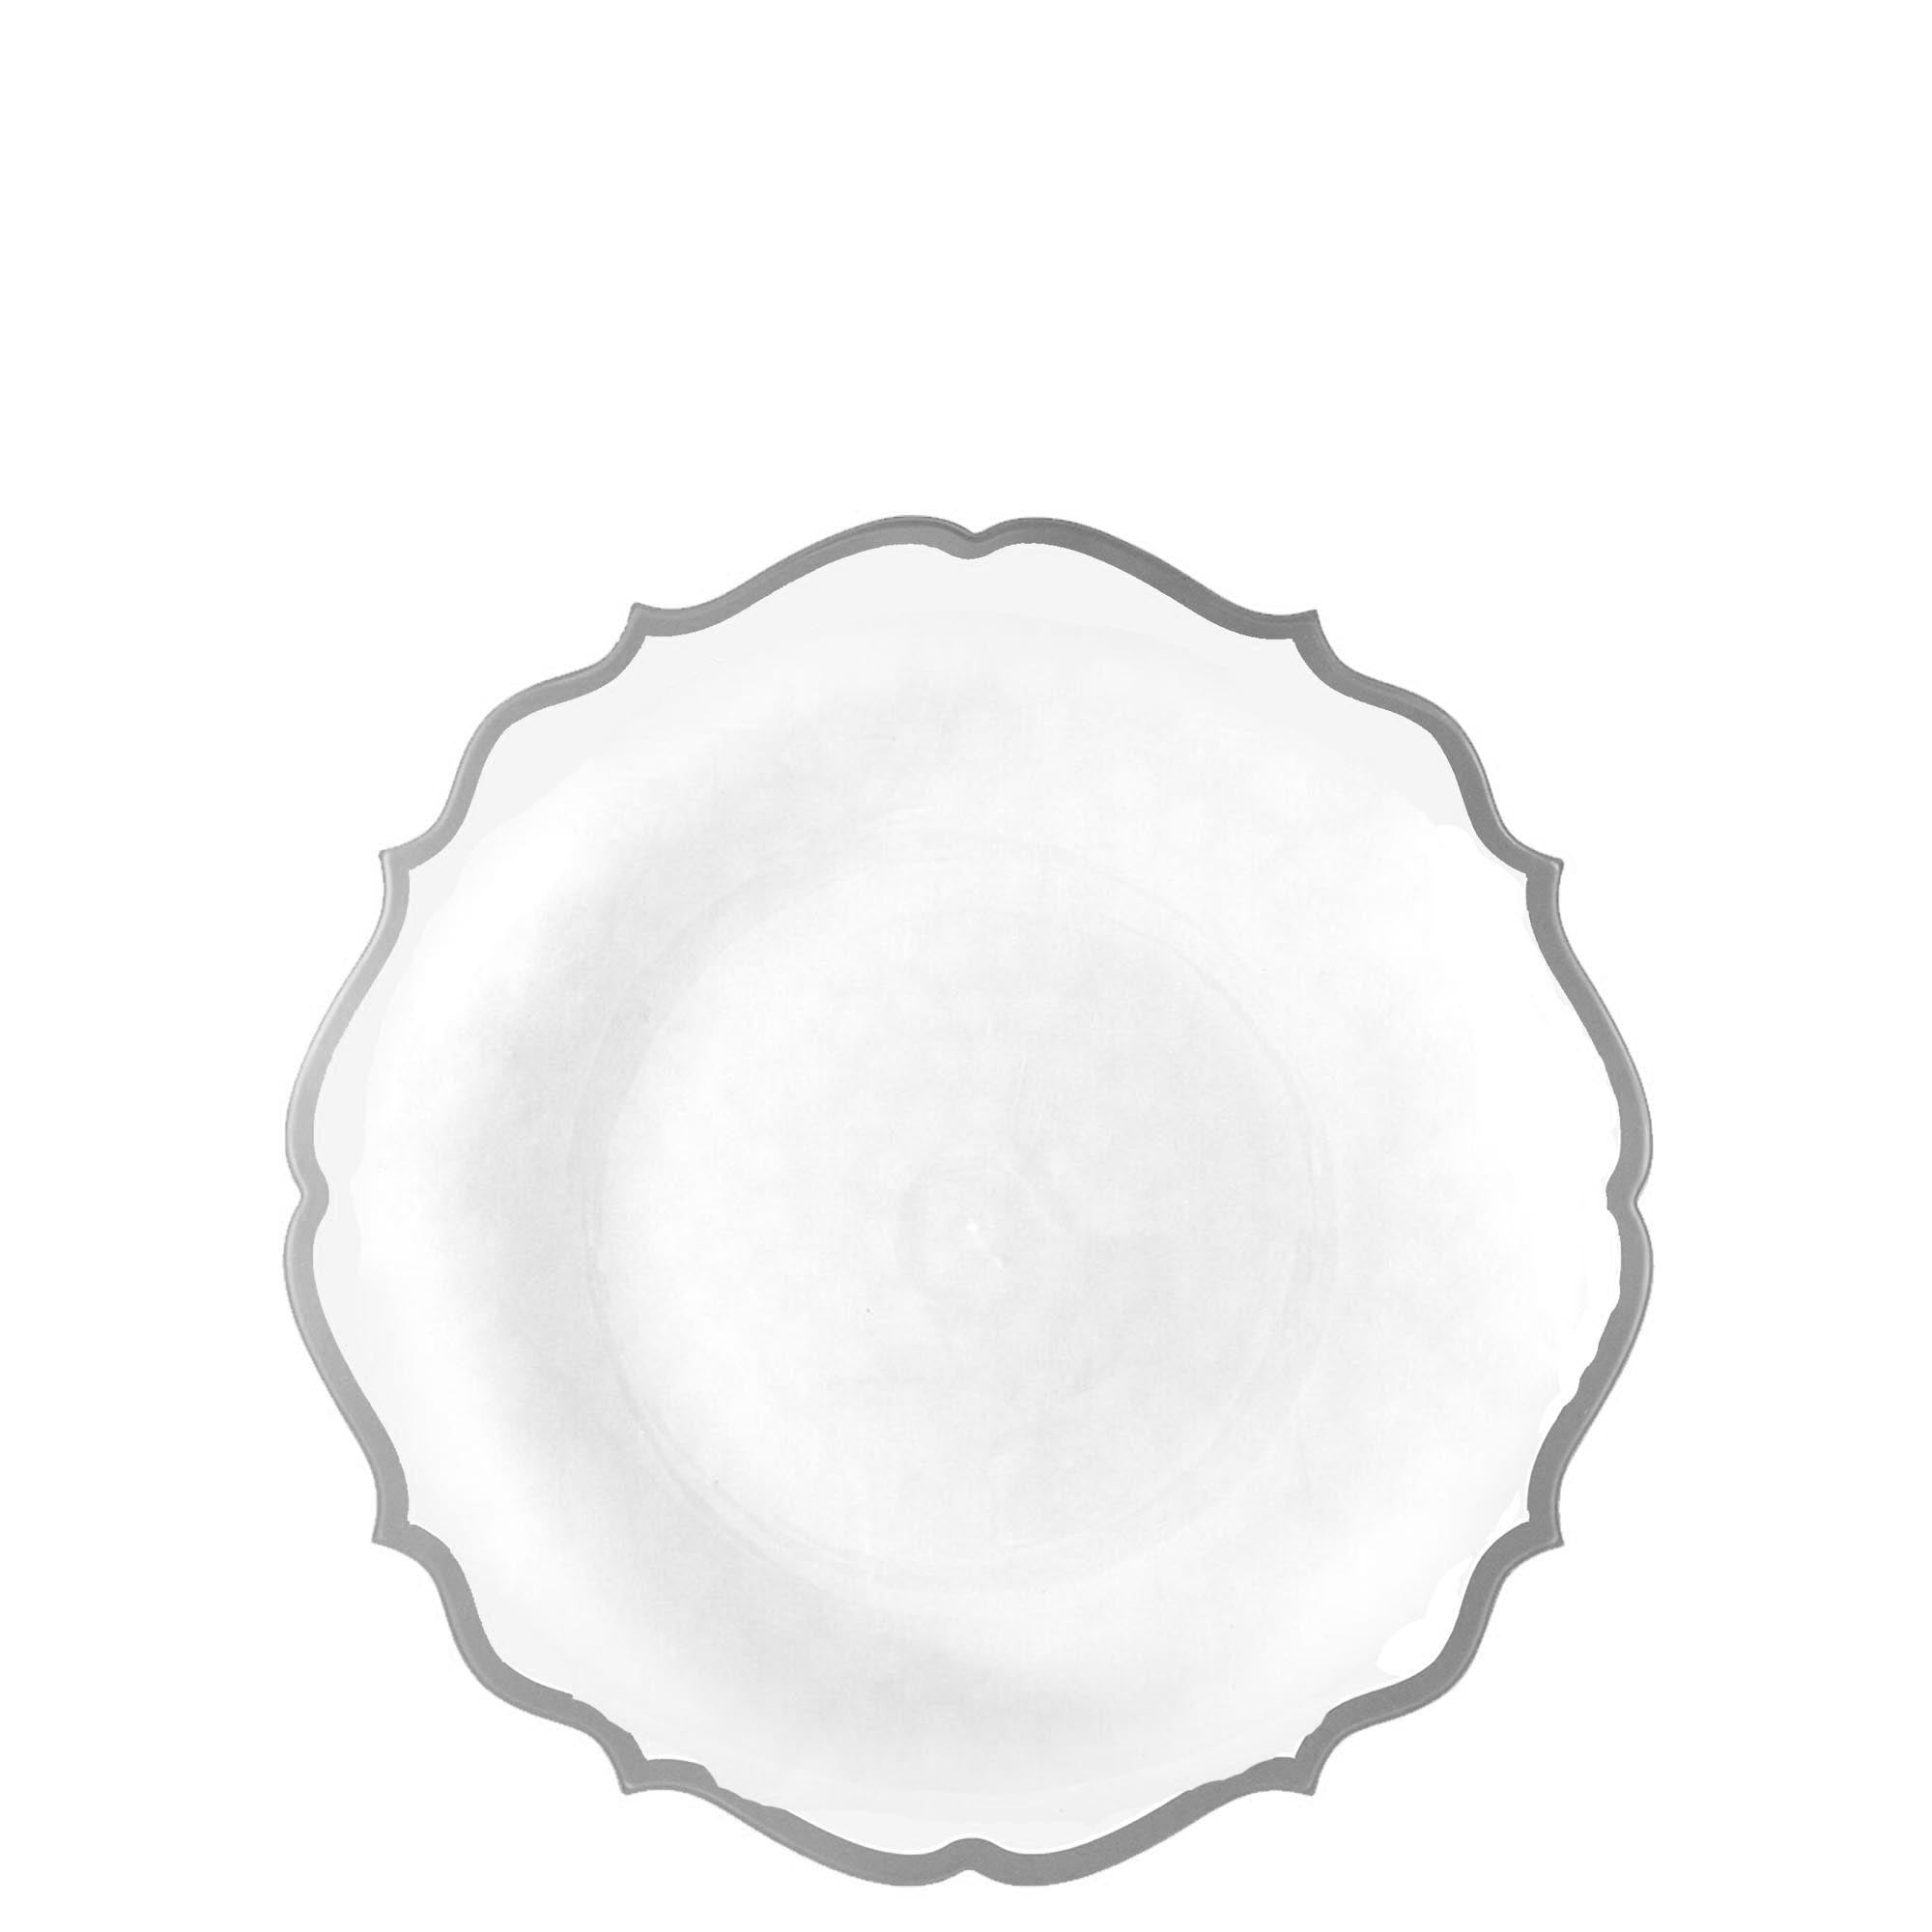 Disposable Fancy White Plastic Plates Silver Rim Contemporary Collection